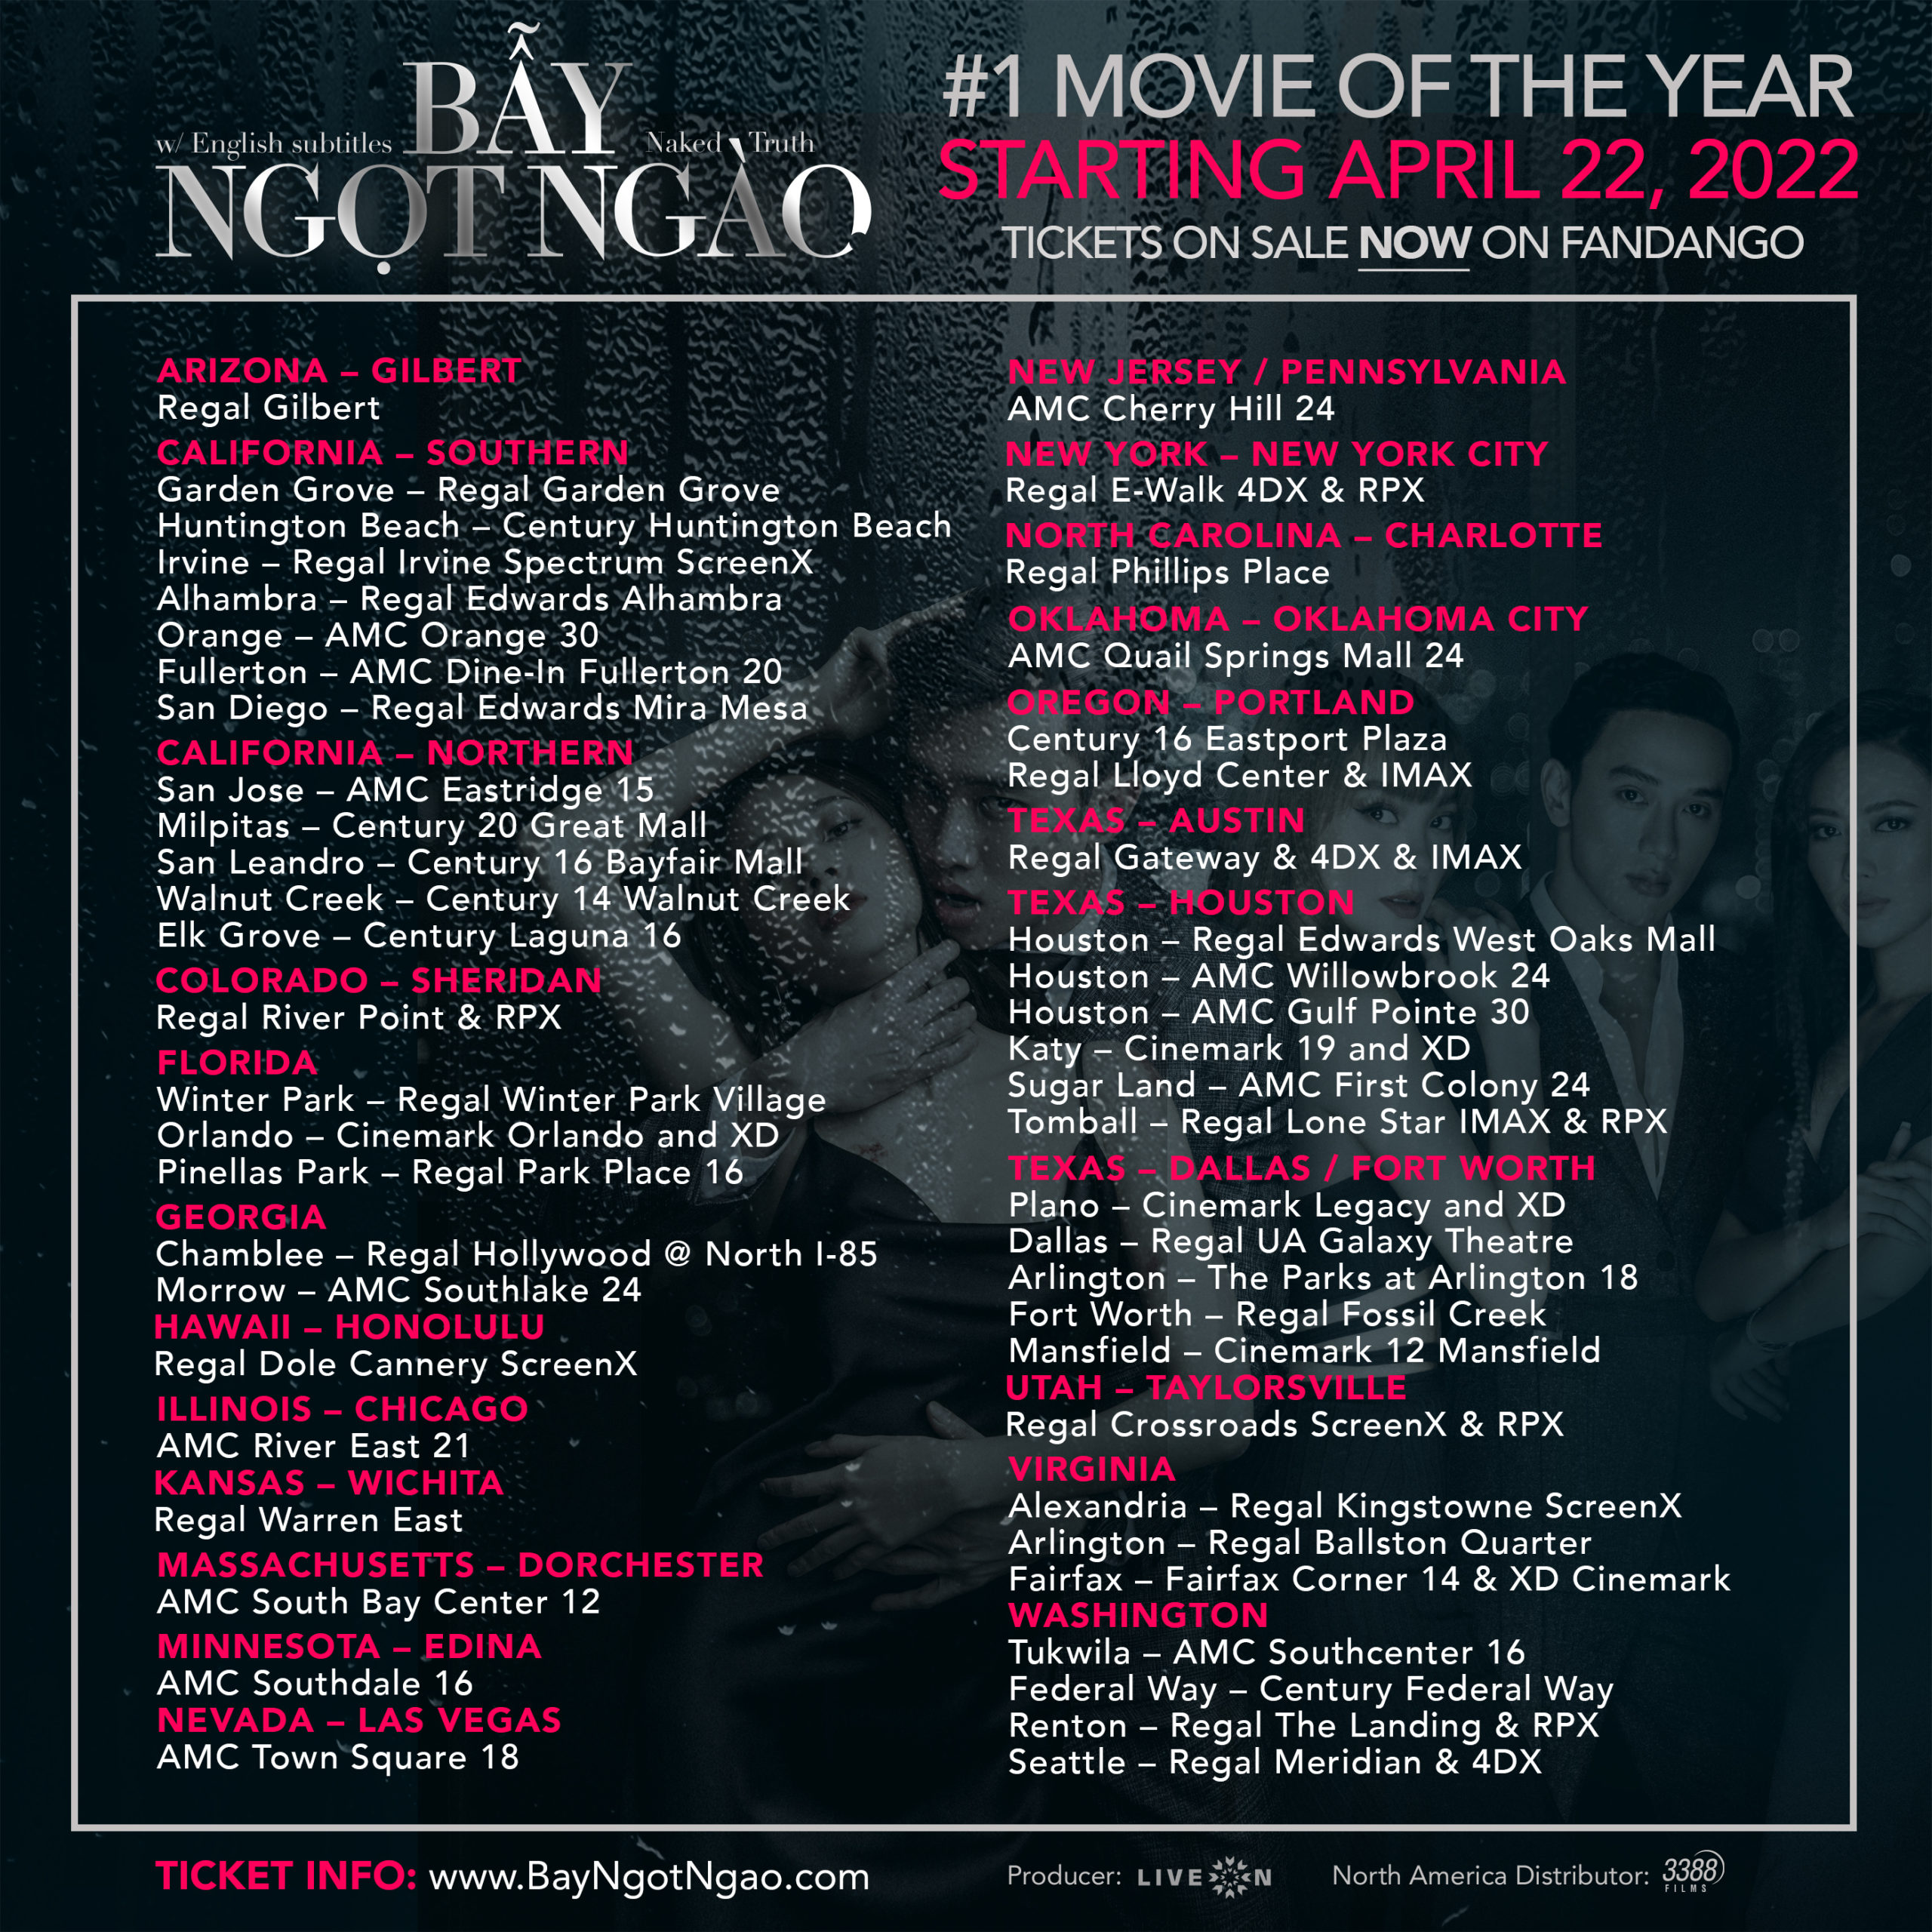 Bay Ngot Ngao US Release Theater List